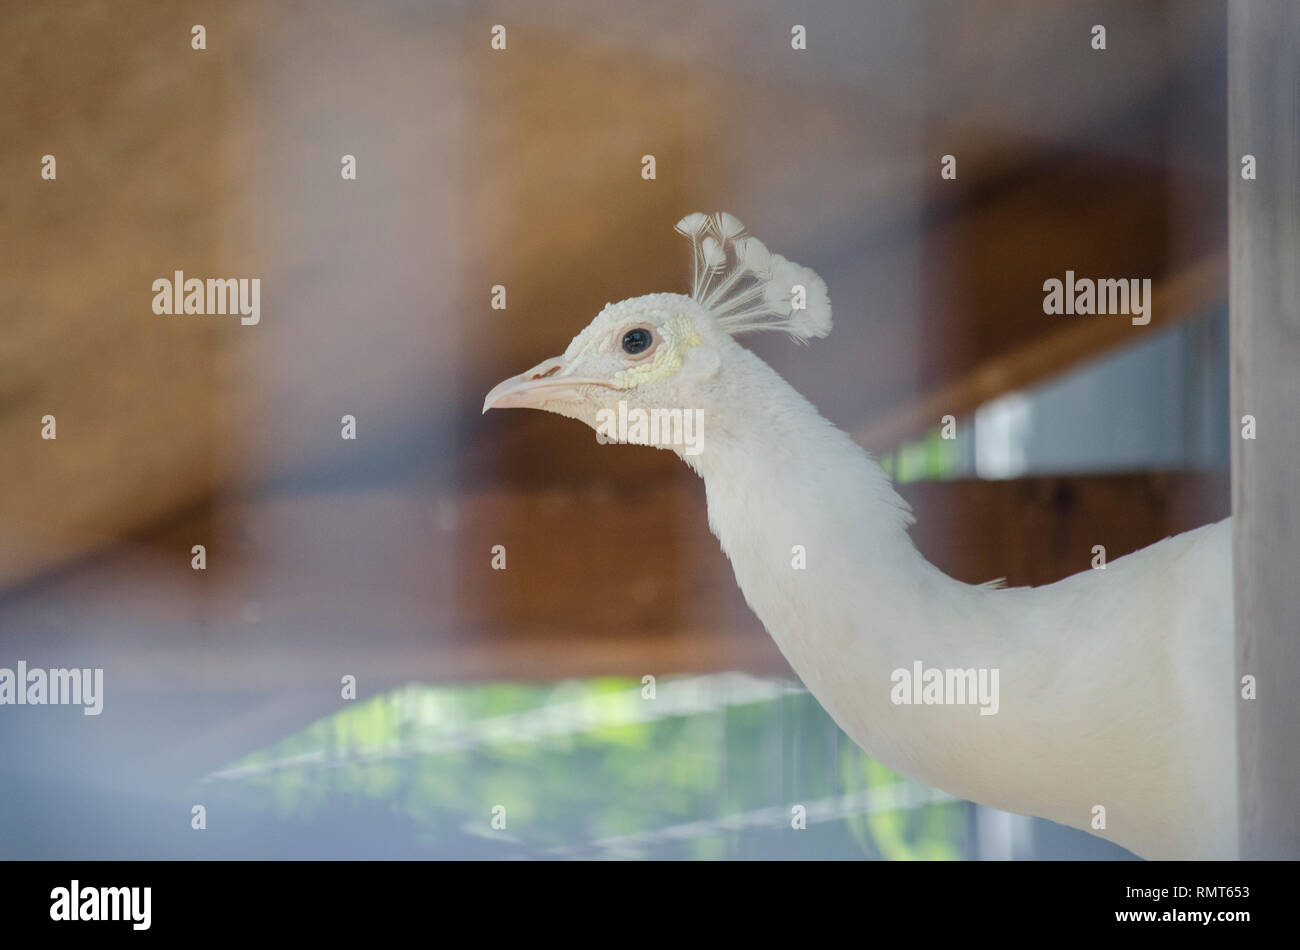 LEUCISTIC ALBINO WHITE PEAFOWL PEACOCK BIRD Stock Photo